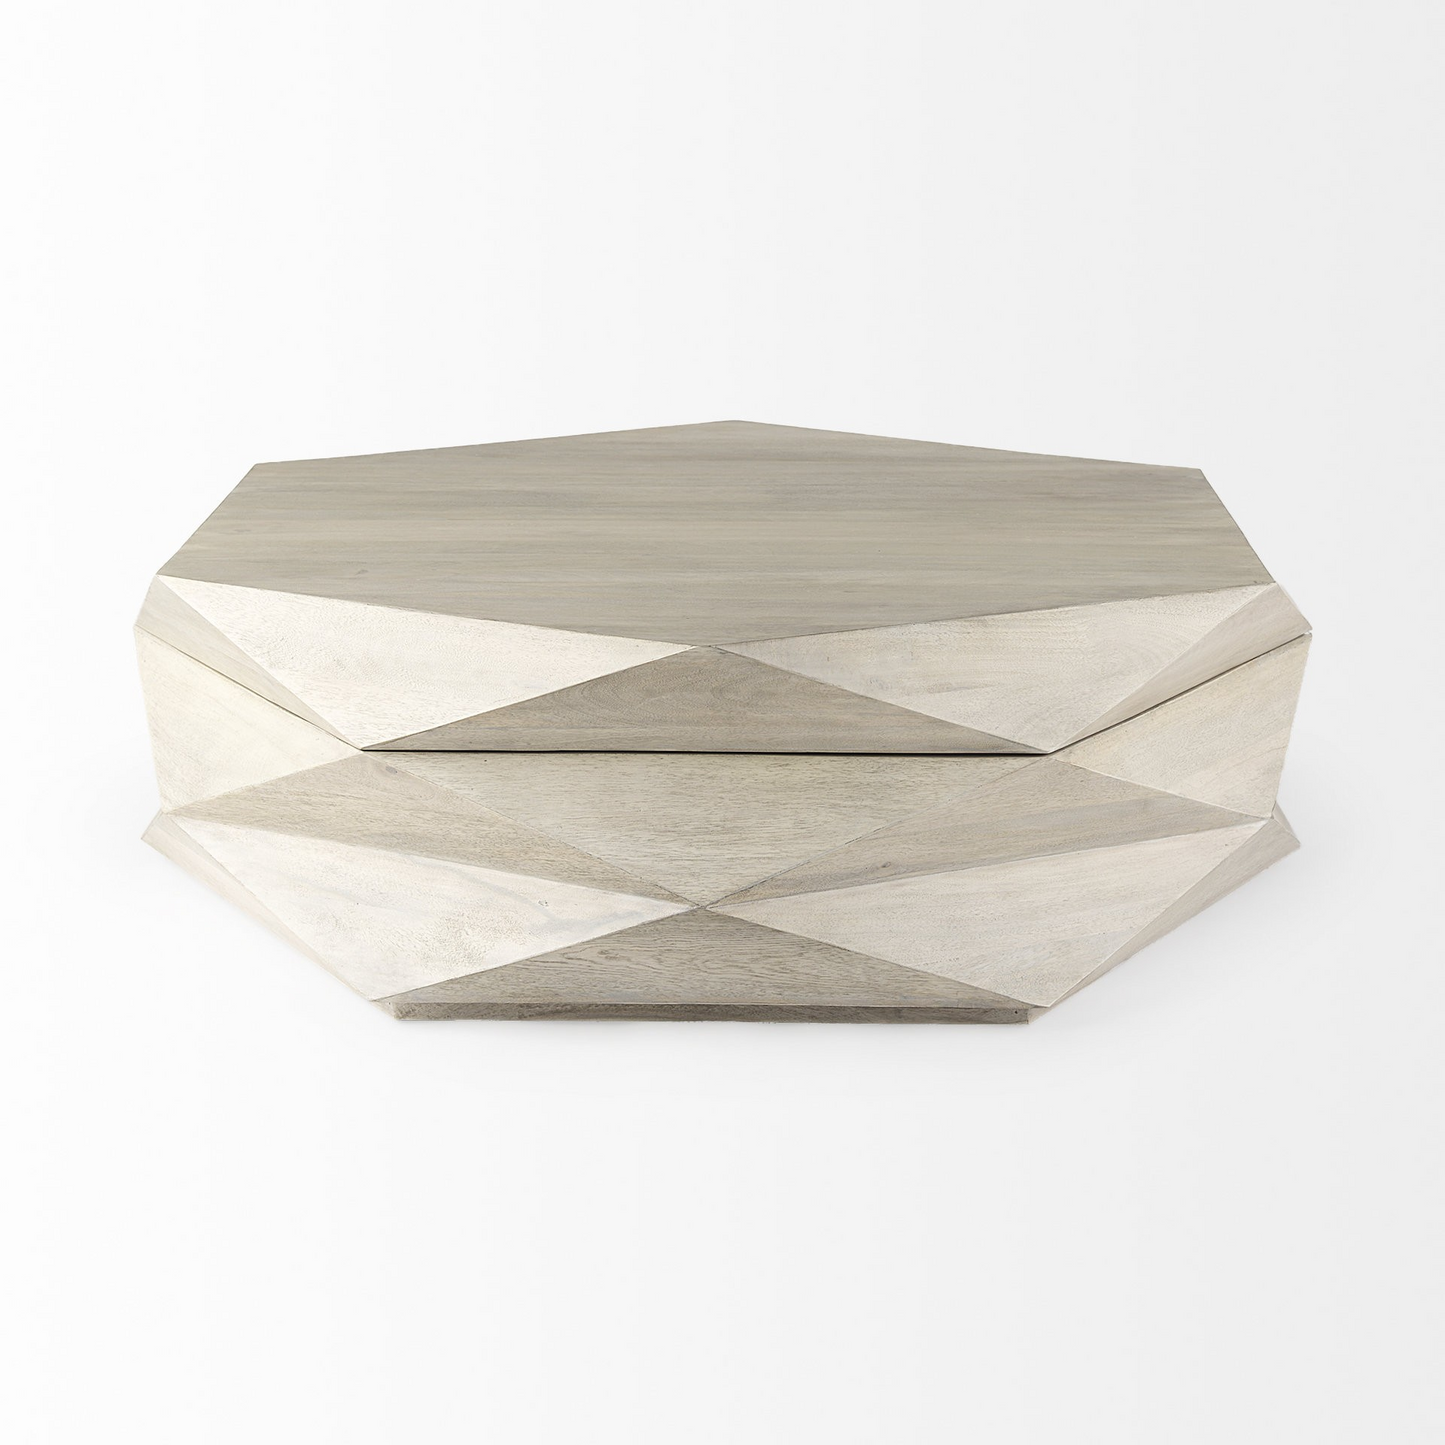 "Mod Geometric Whitewash Solid Wood Coffee Table"